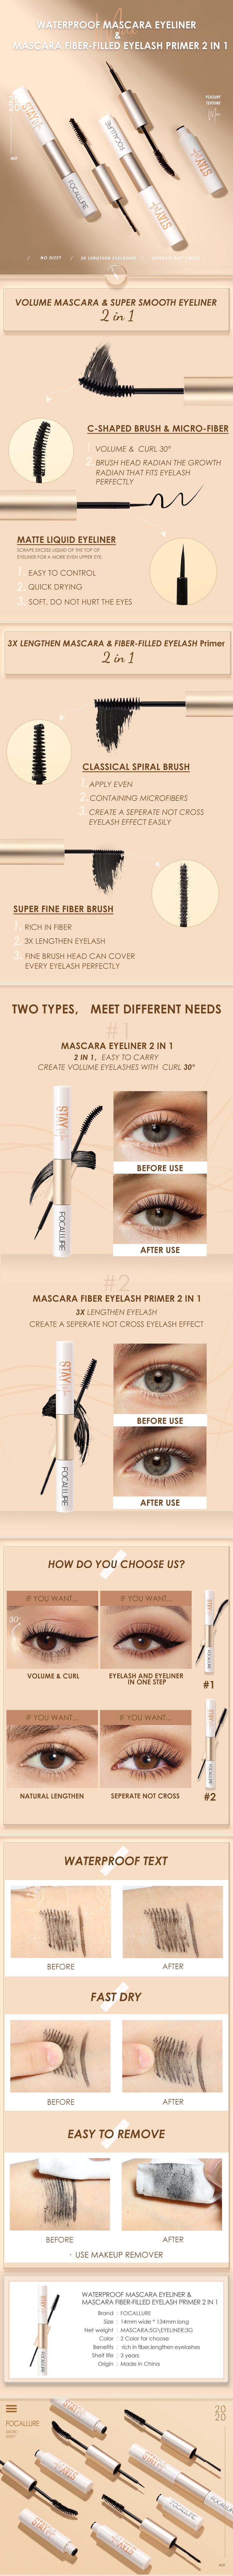 Focallure FA160 2IN1 Lengthening Mascara & Eyeliner Mascara Fiber Eyelash Mascara (2types)